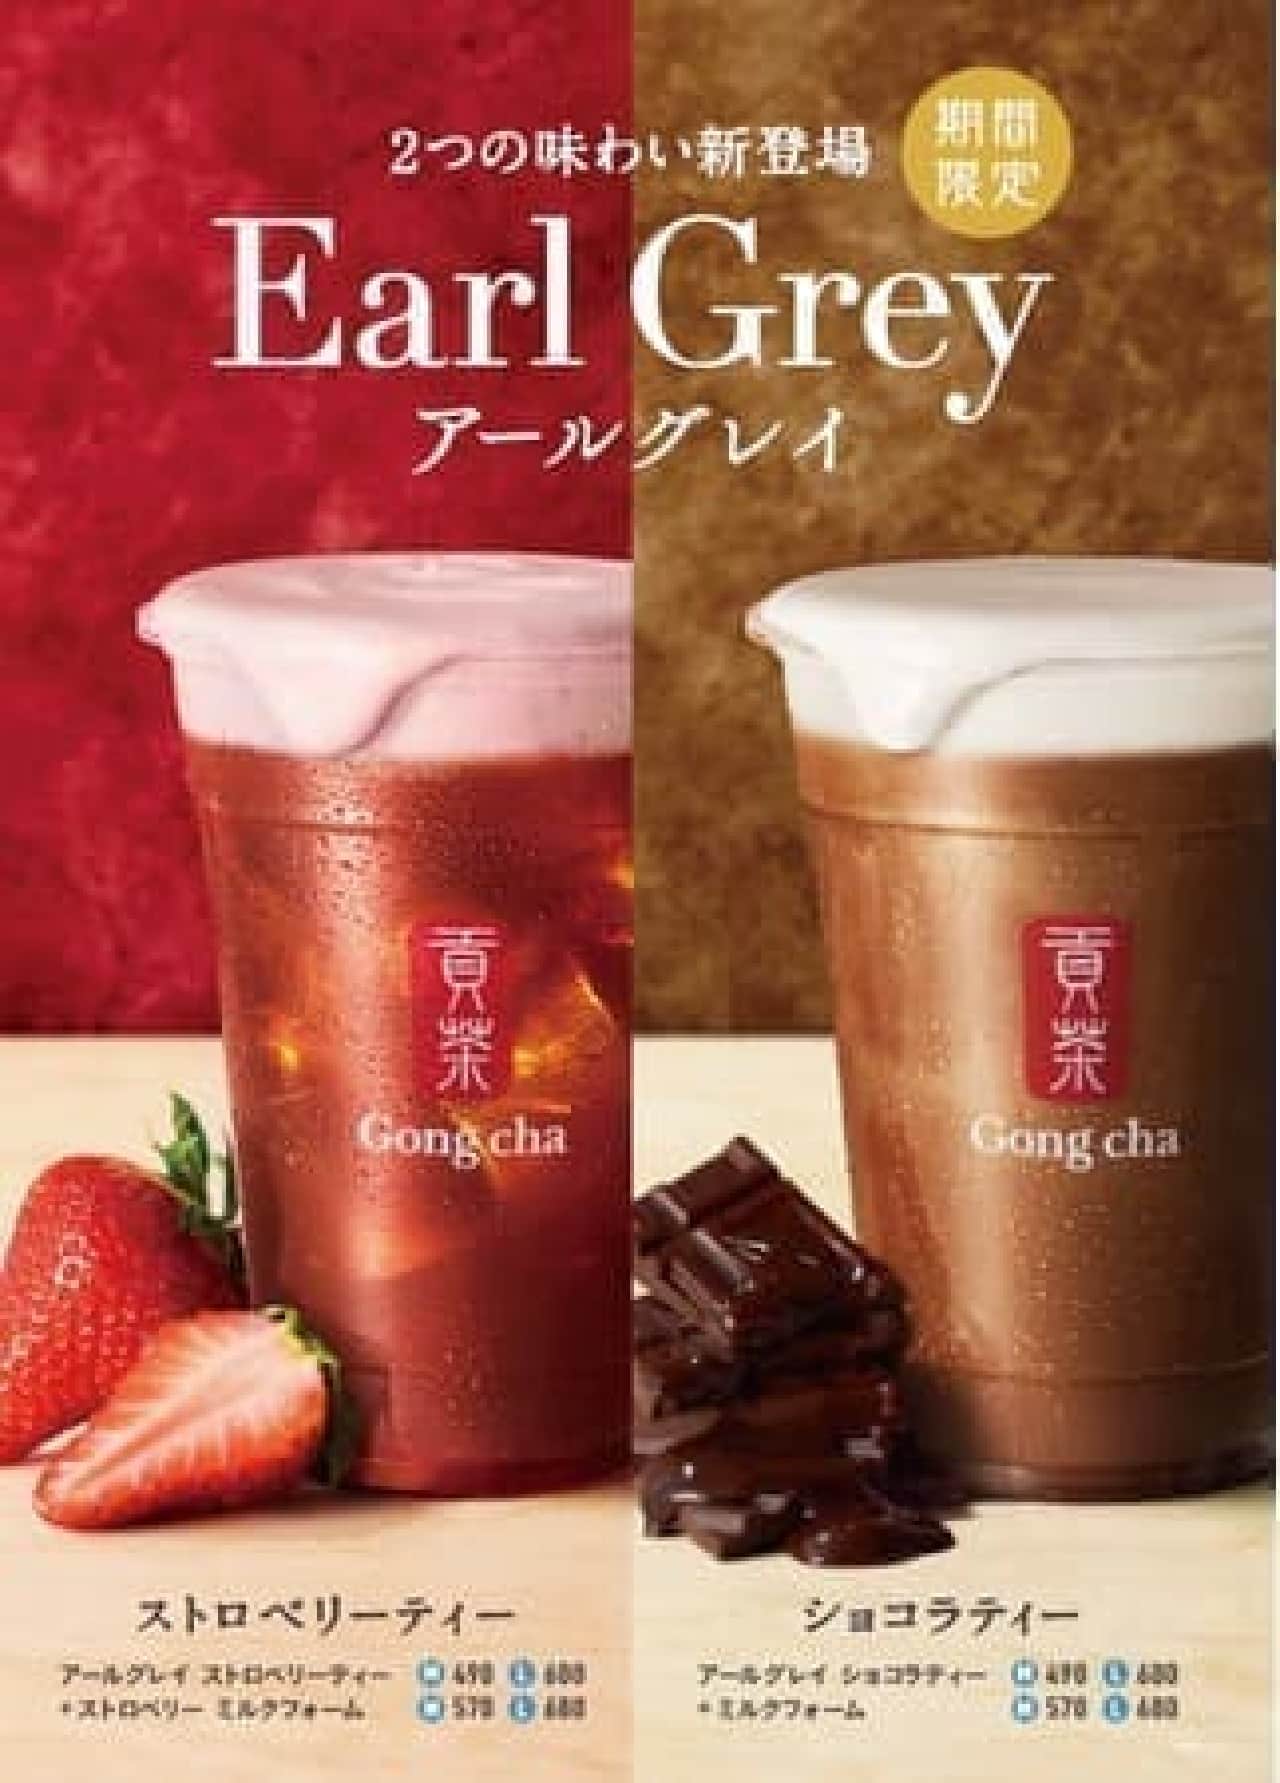 Gong Cha "Earl Gray Strawberry Tea" and "Earl Gray Chocolat Tea"